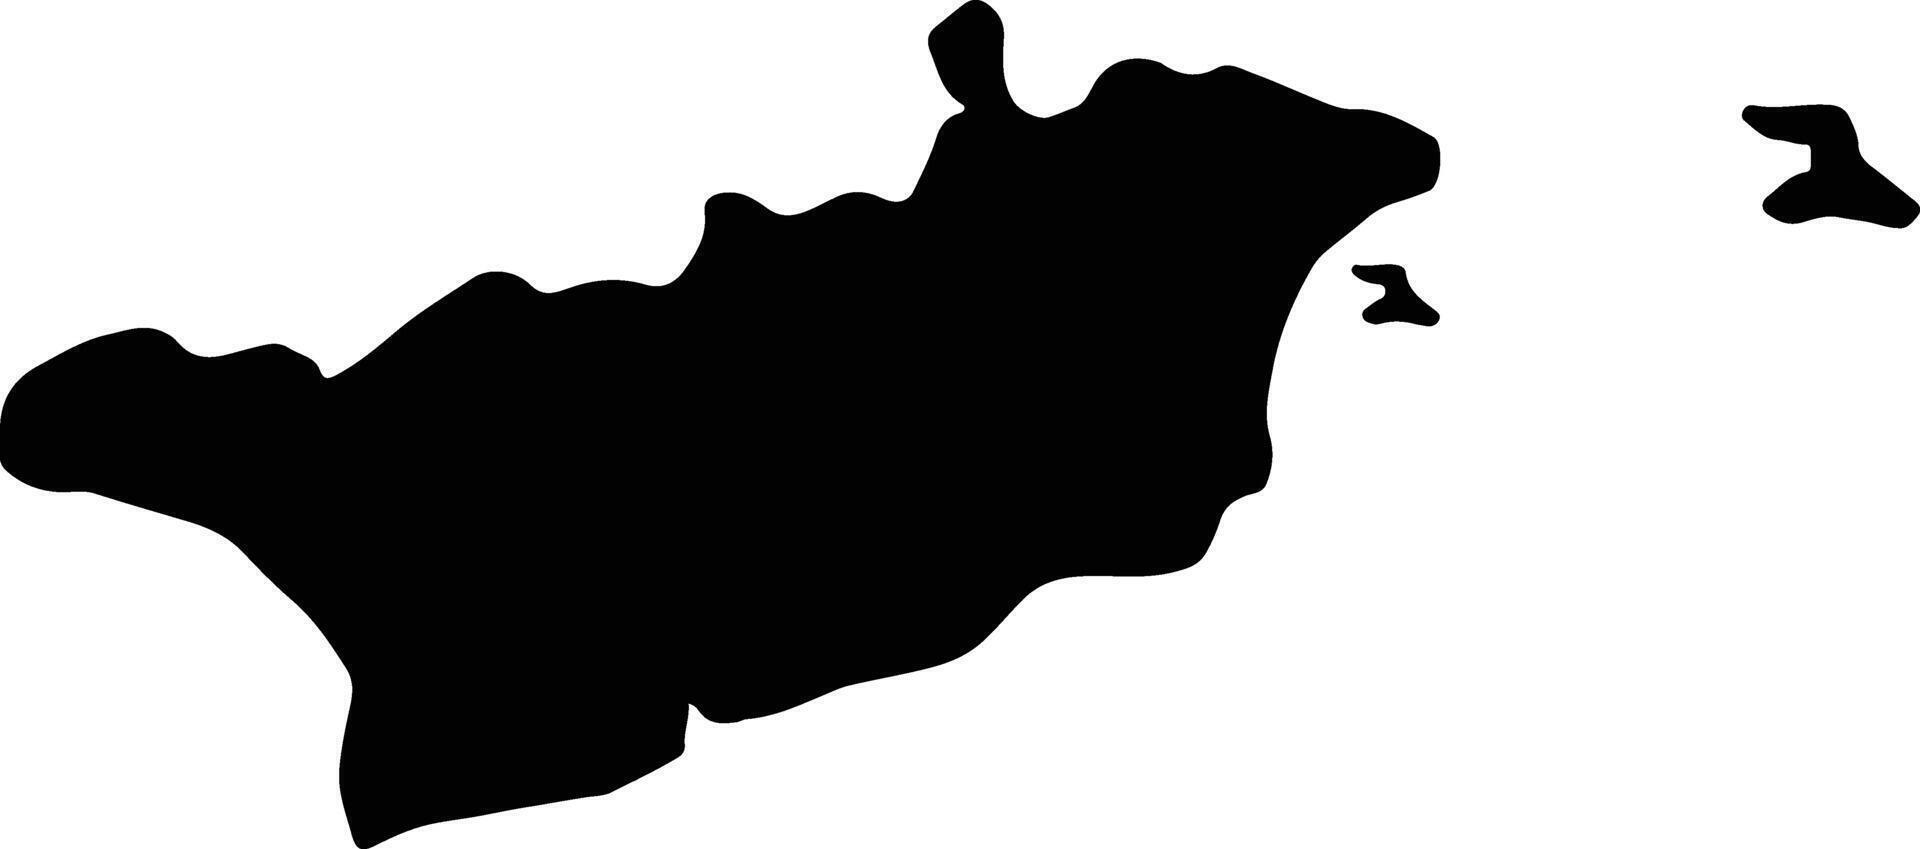 Larnaca Cyprus silhouette map vector